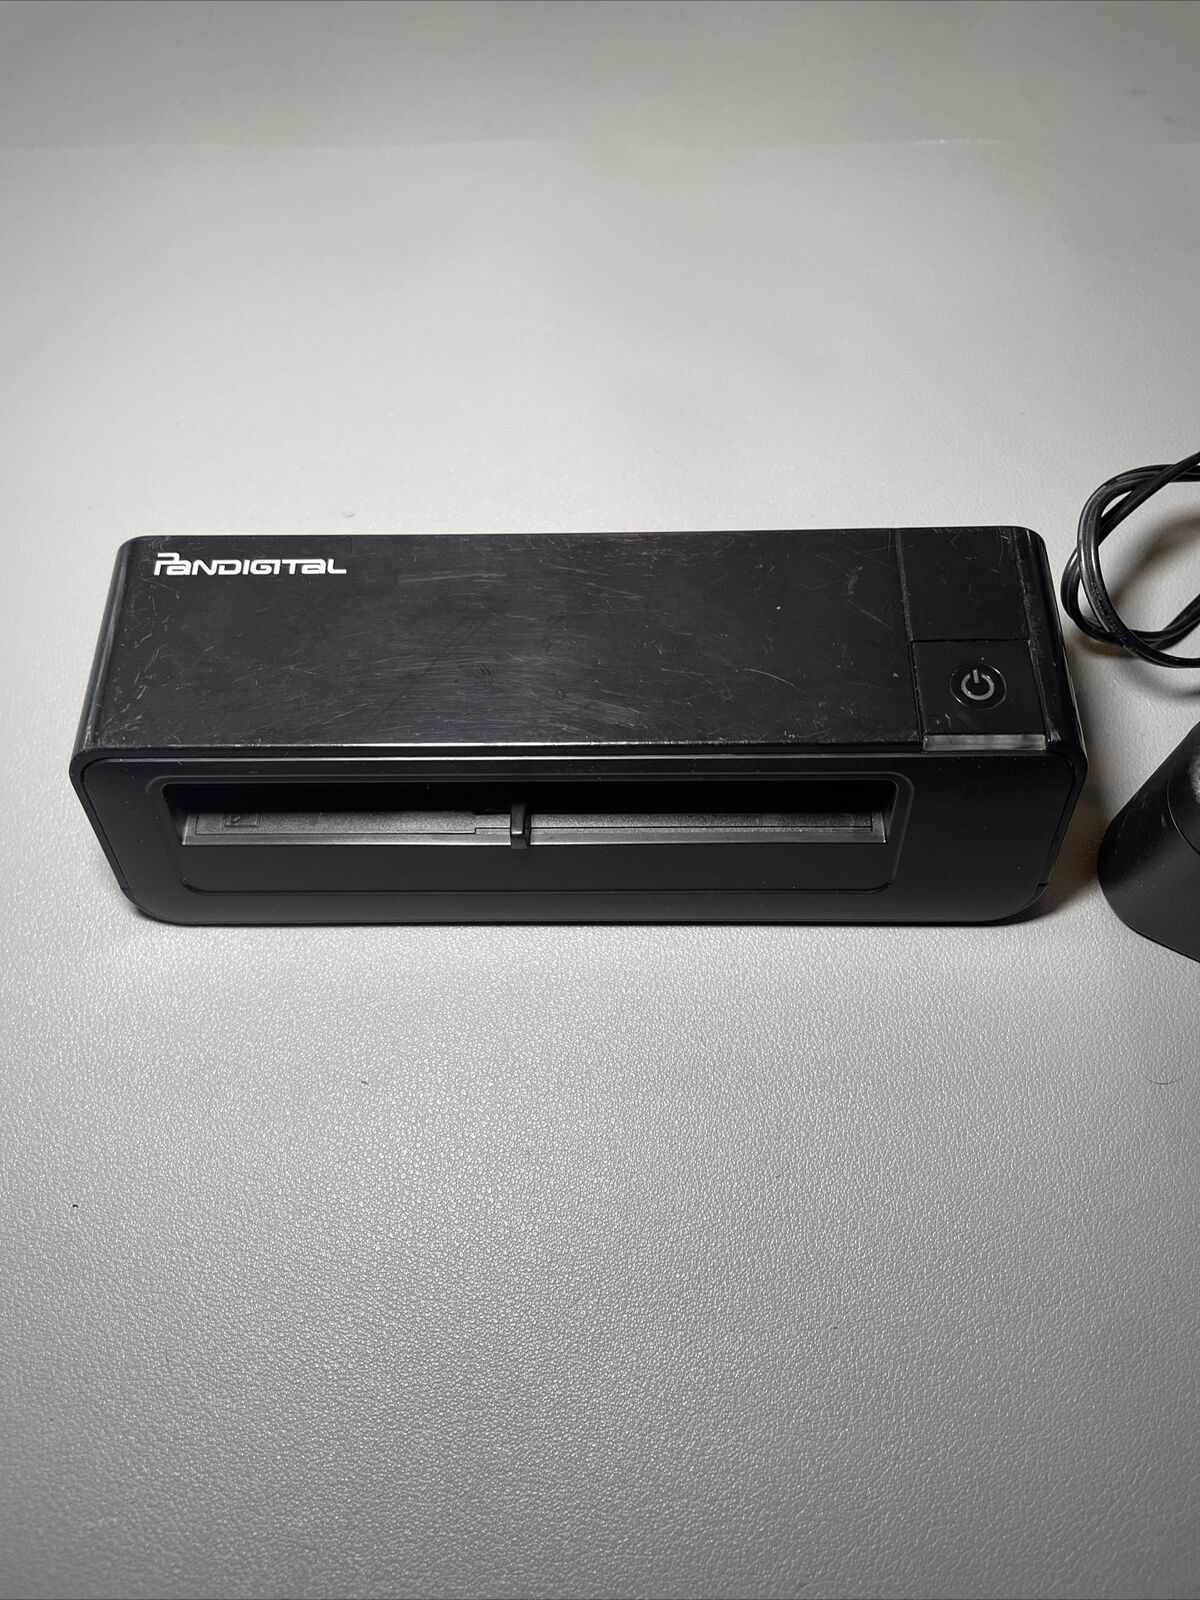 PanDigital One-Touch PhotoLink Scanner PANSCN02 Black